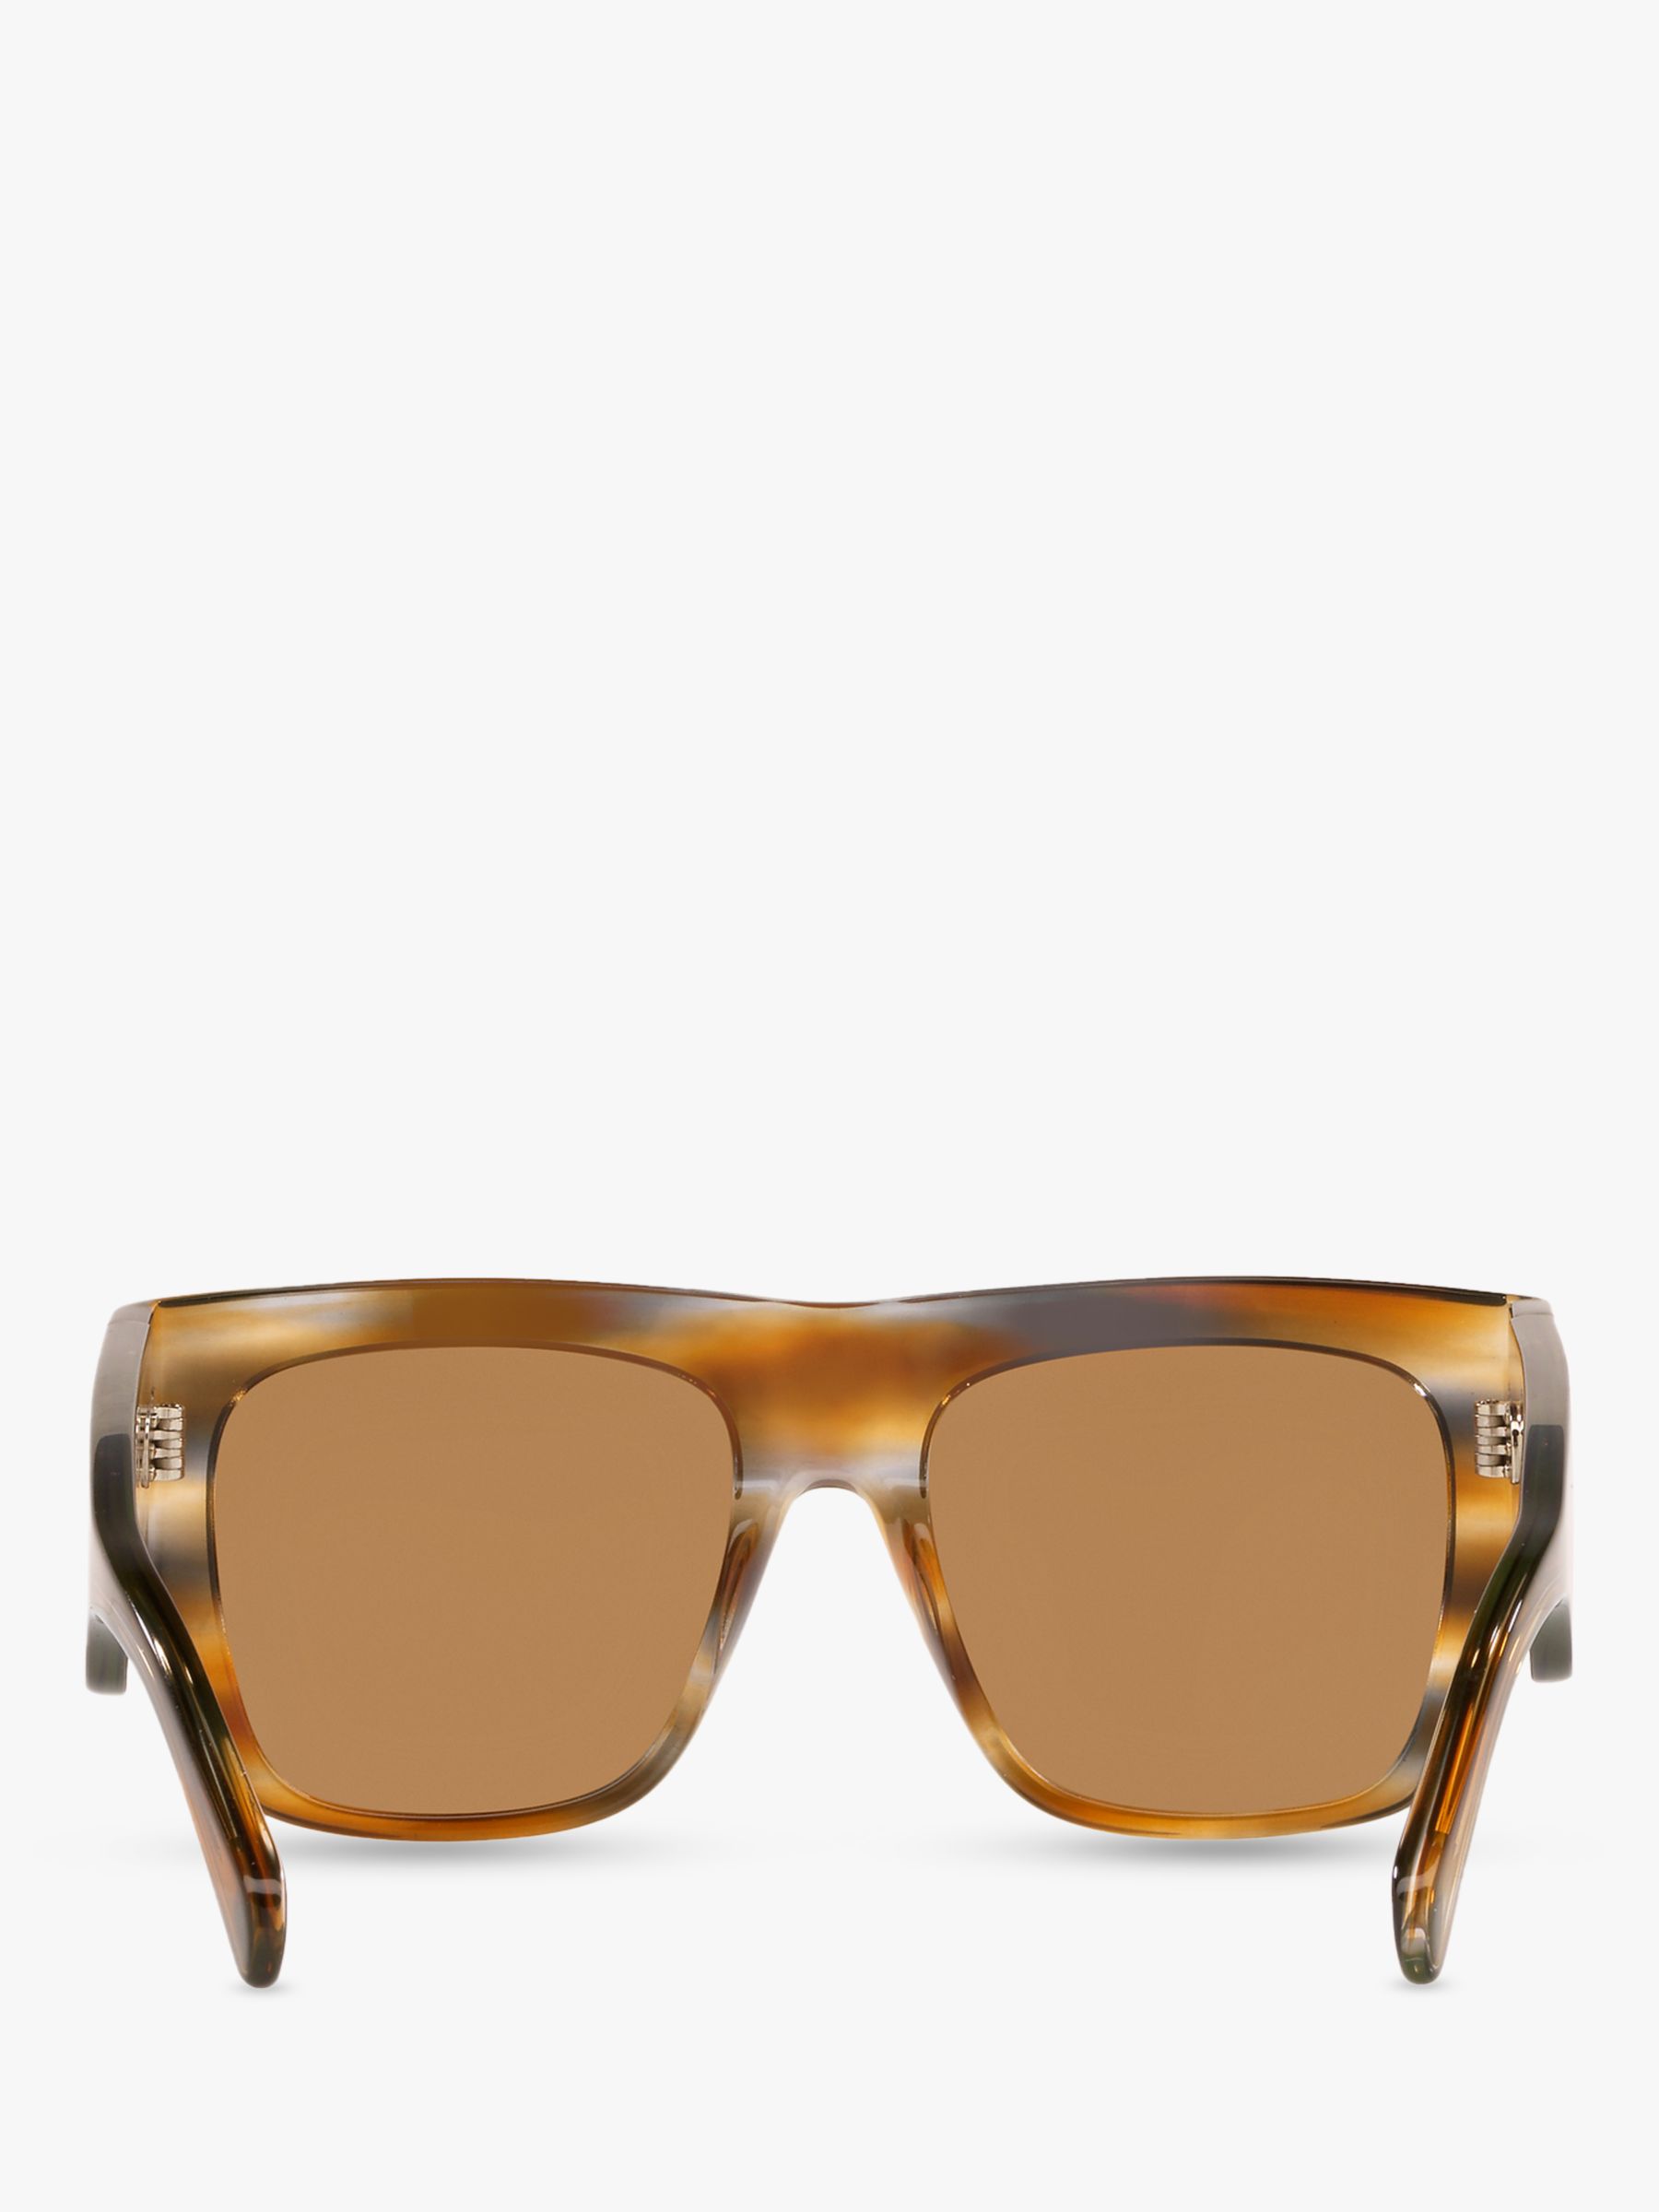 Celine CL4056IN Women's Rectangular Sunglasses, Tortoise/Brown